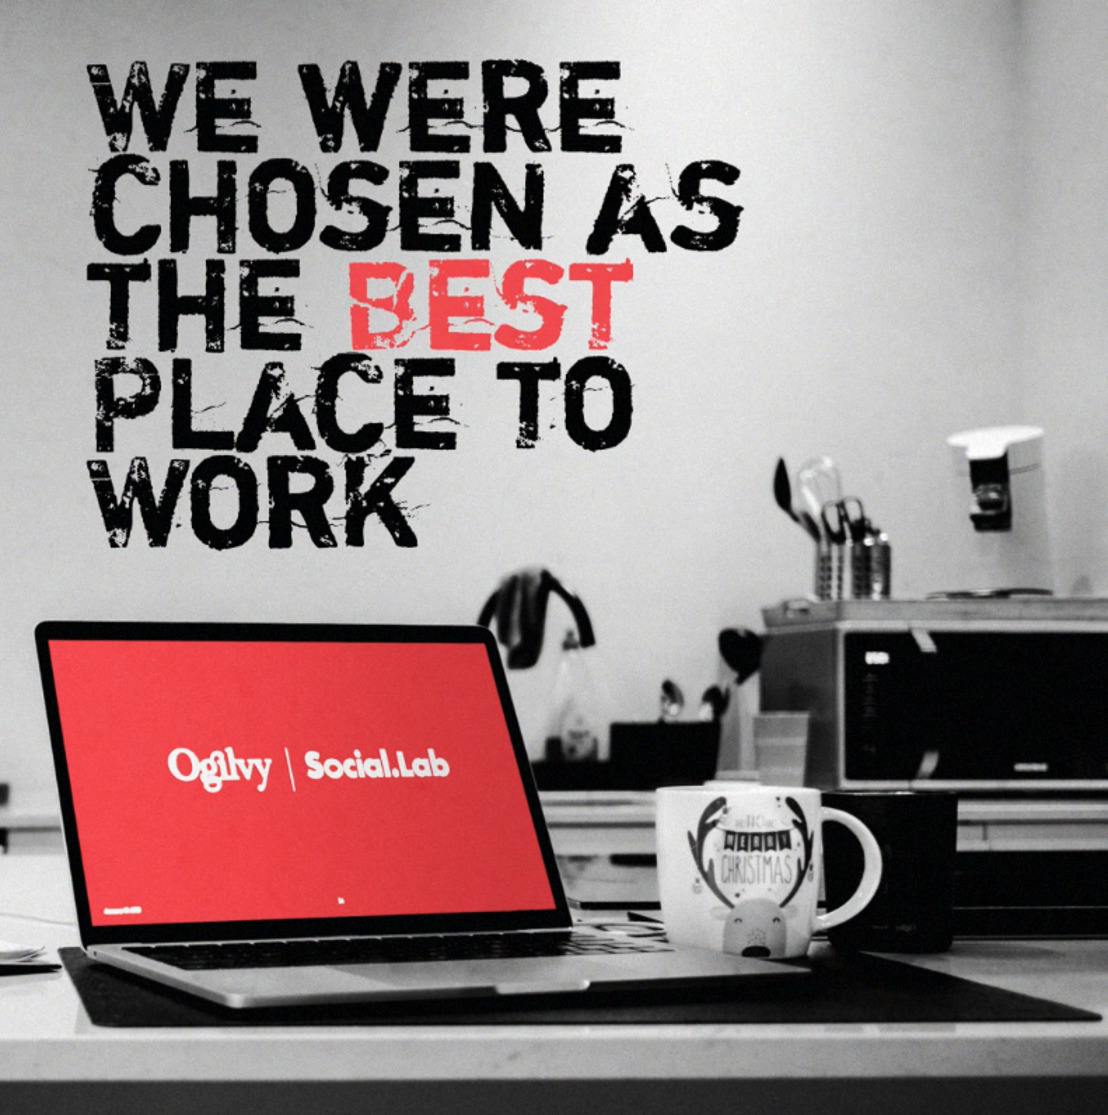 Ogilvy Social.Lab est “The Best Place to Work”